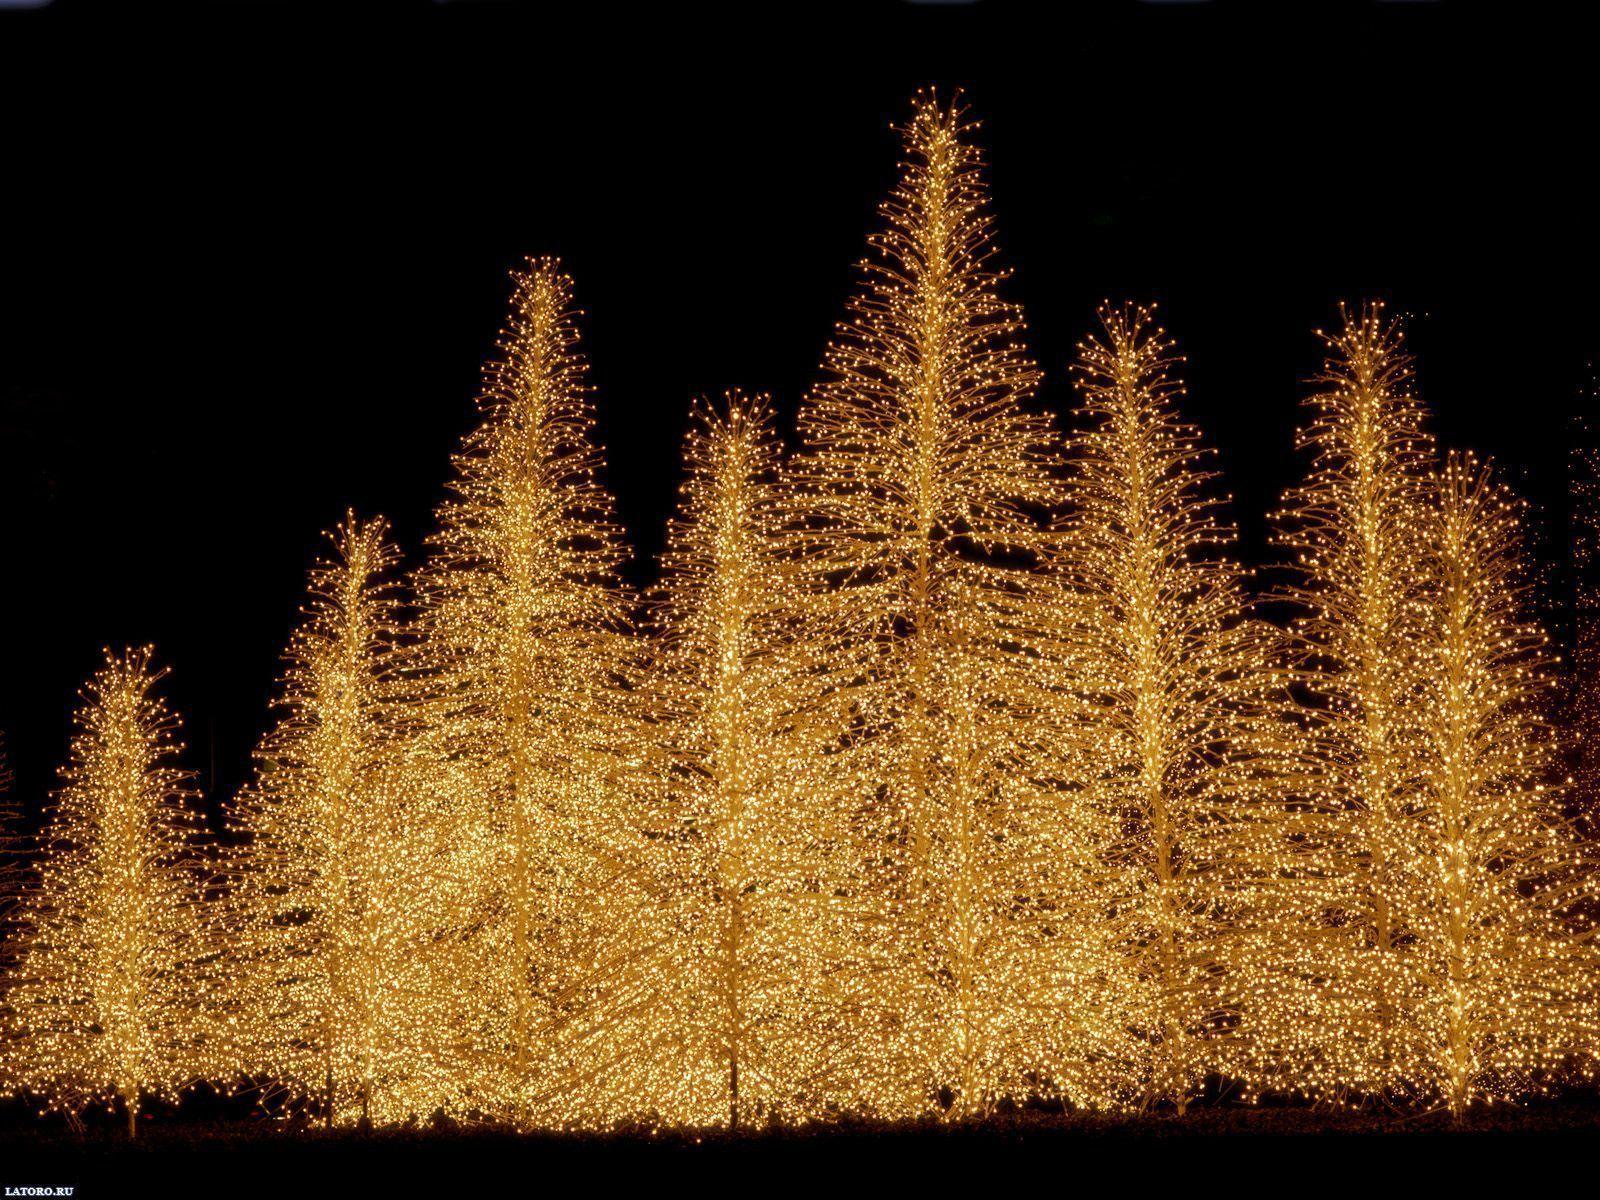 New Year&;s Tree Desktop Wallpaper FREE on Latoro.com